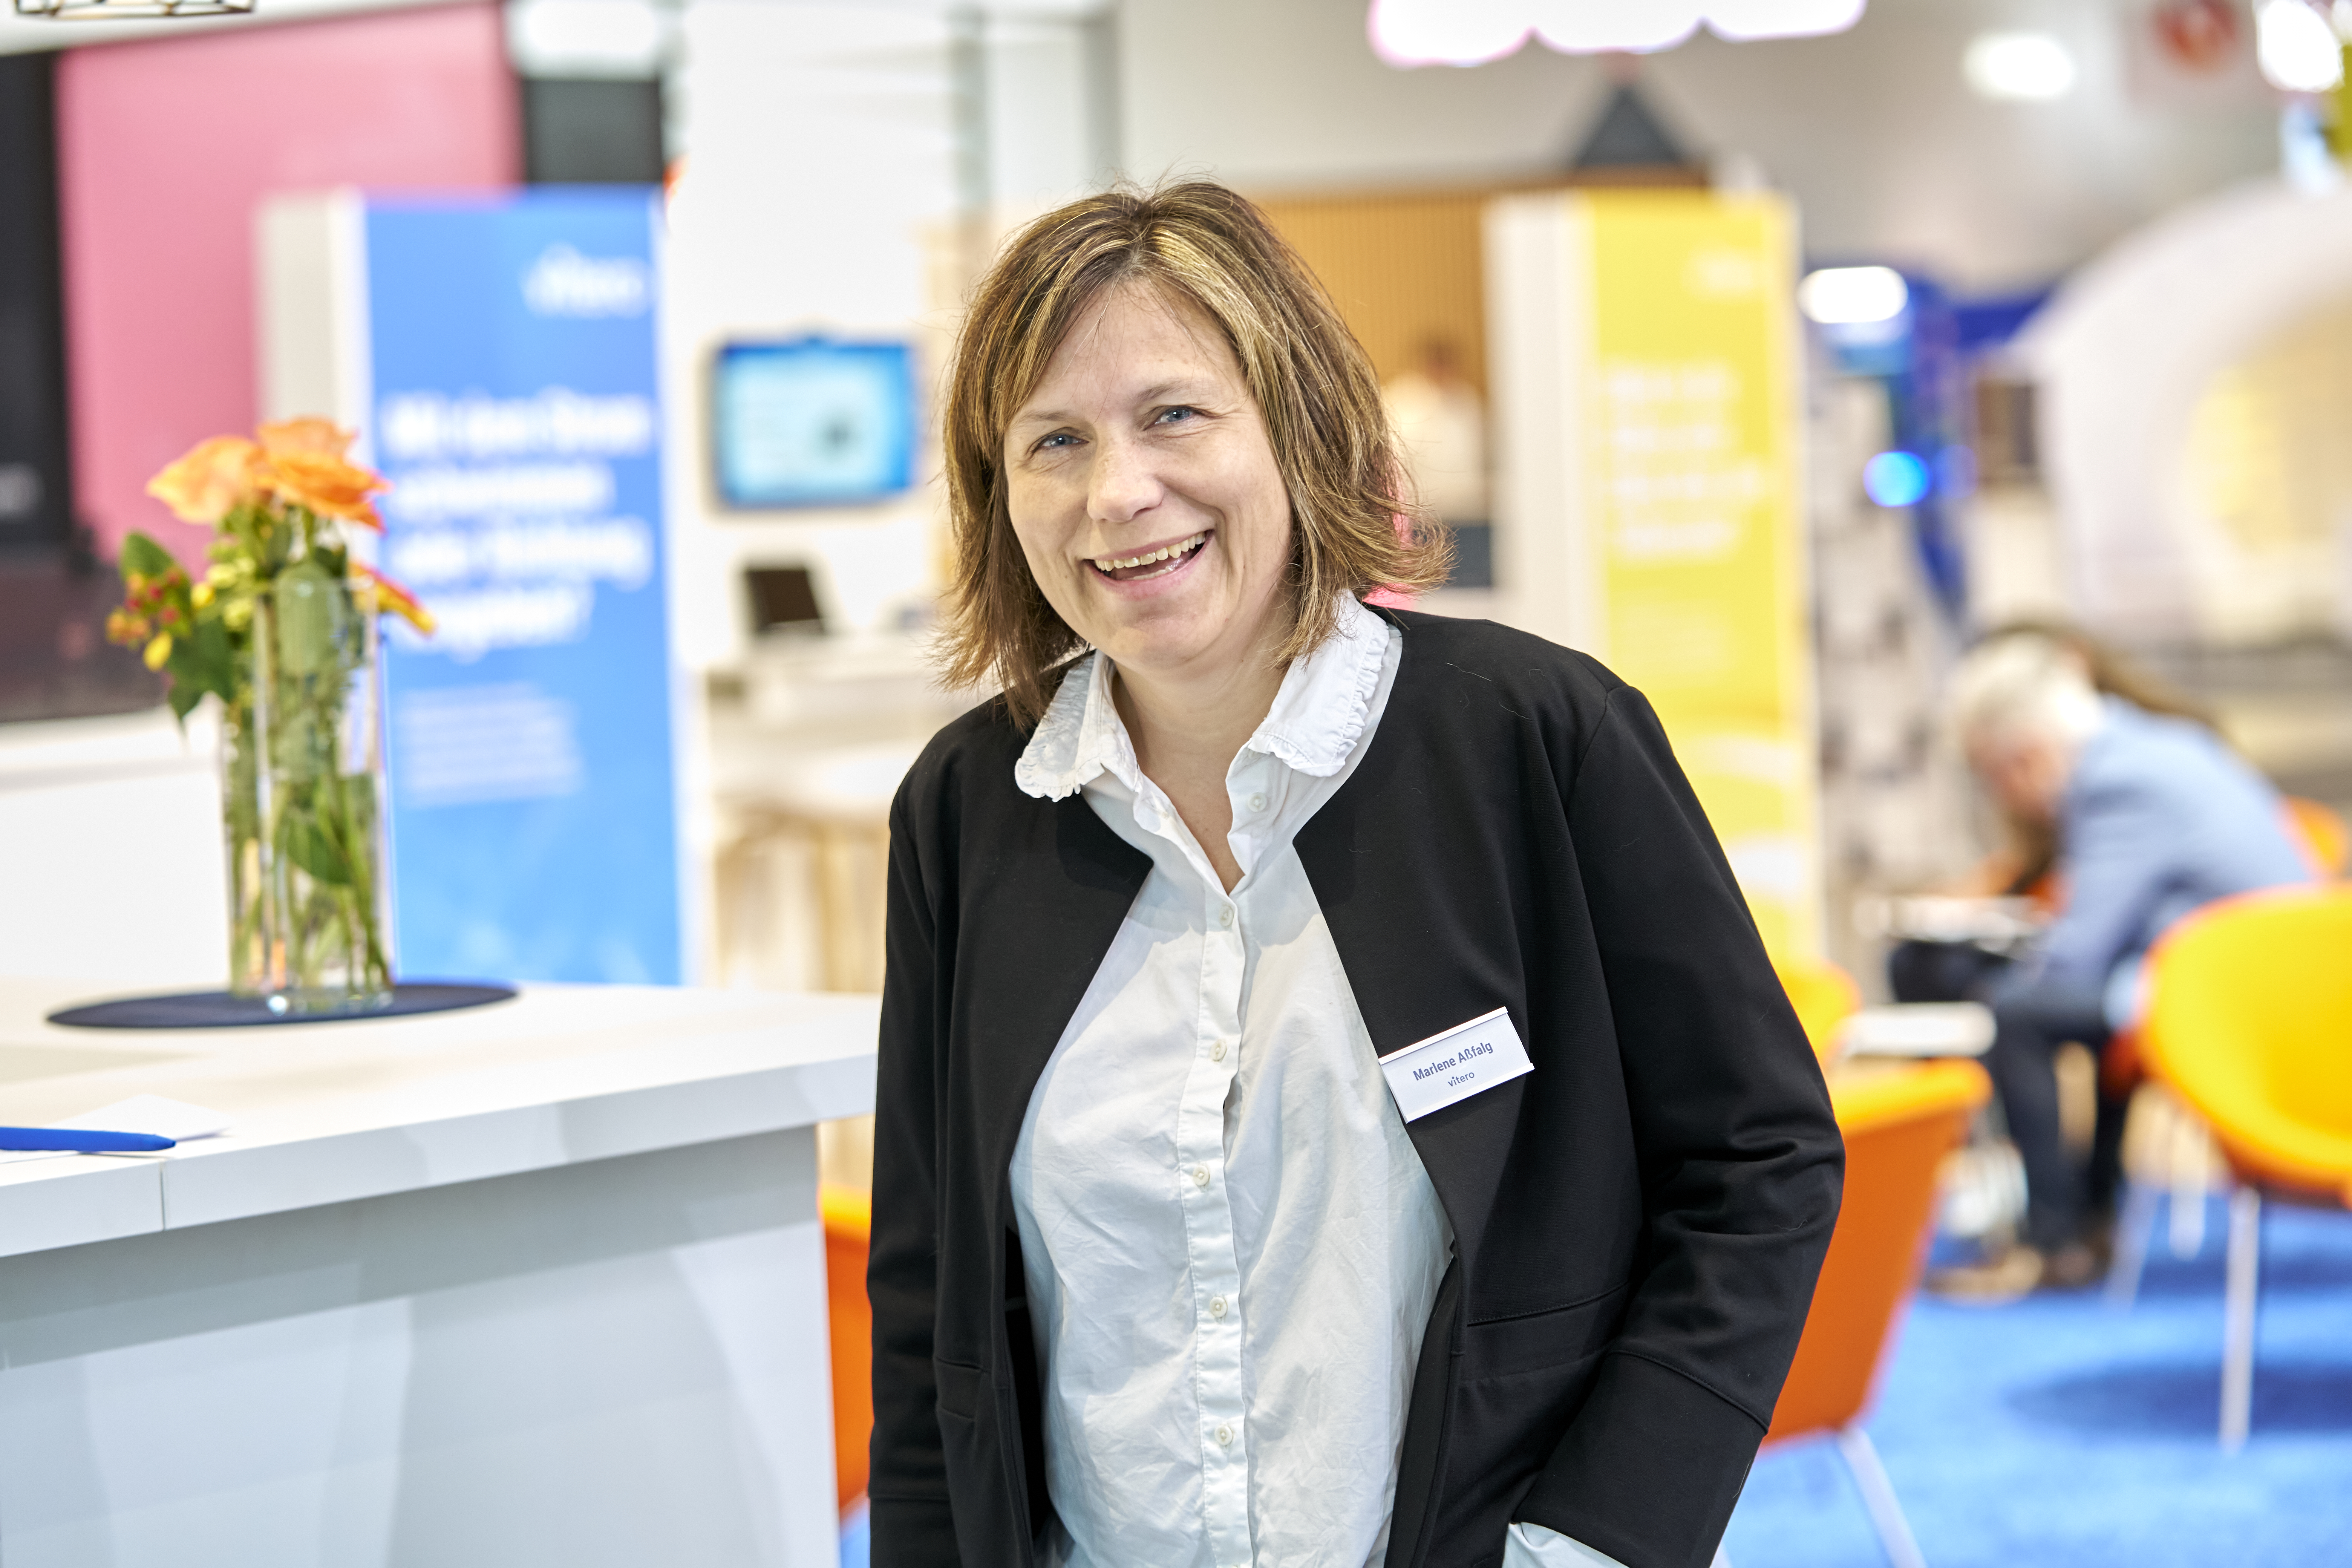  Marlene Aßfalg, Head of Marketing at vitero GmbH 